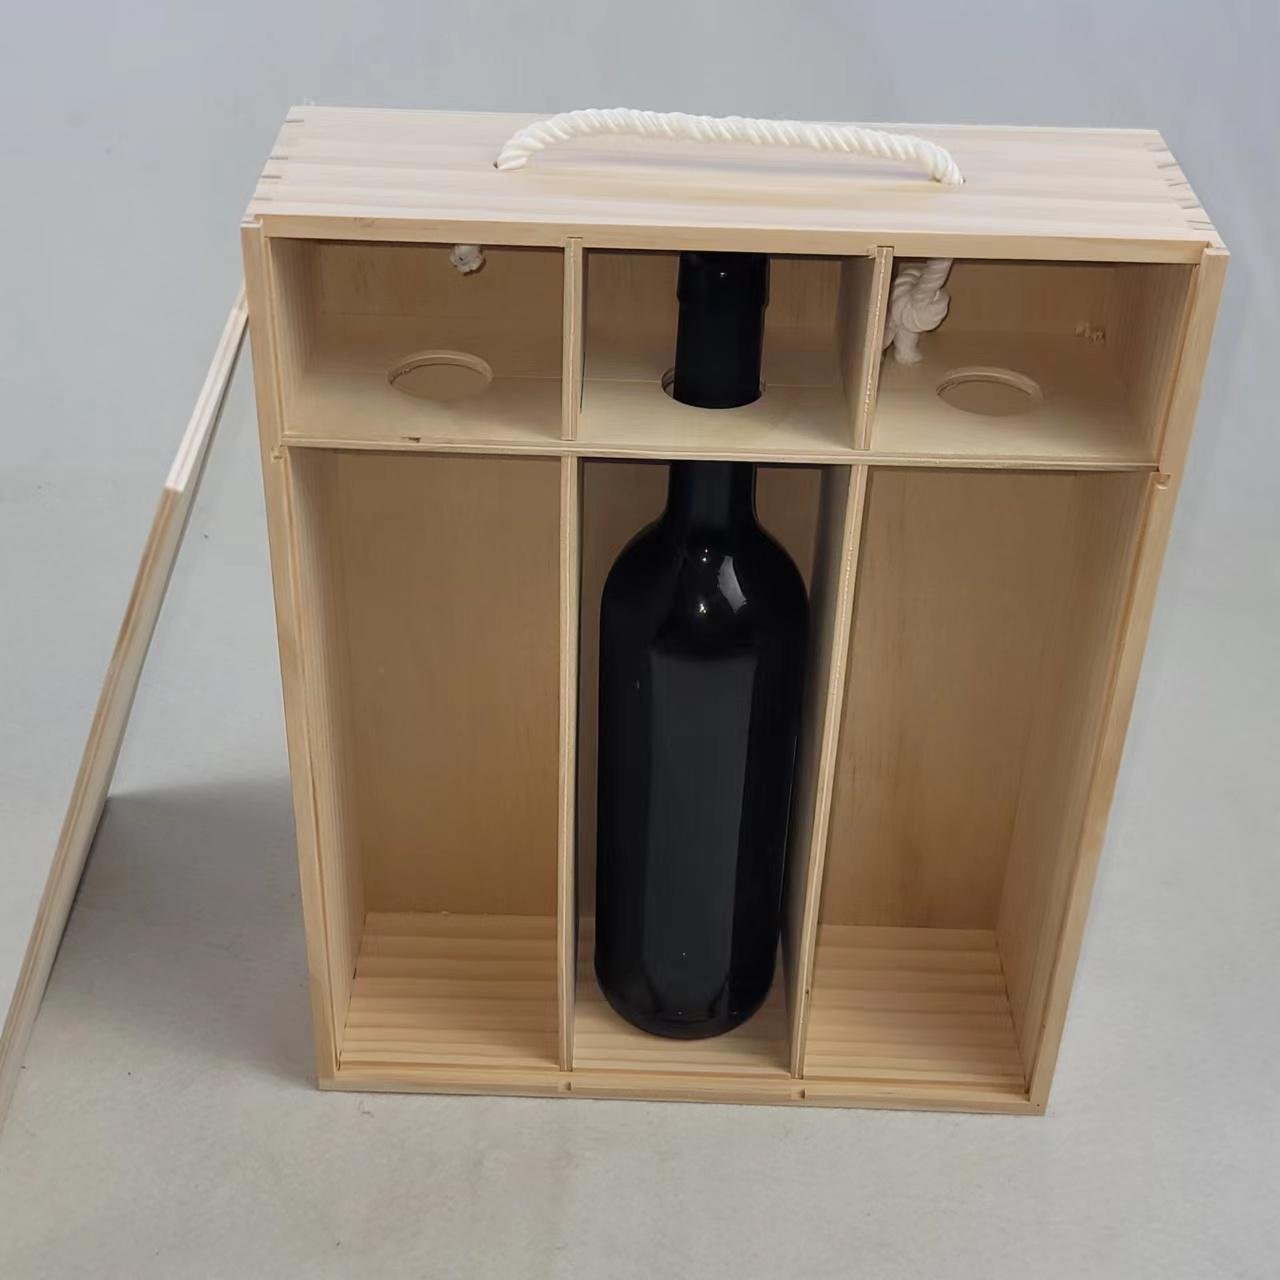 FSC&BSCI sliding lid pine Wood Wine Bottle Holder Decorative Wooden Gift Box 